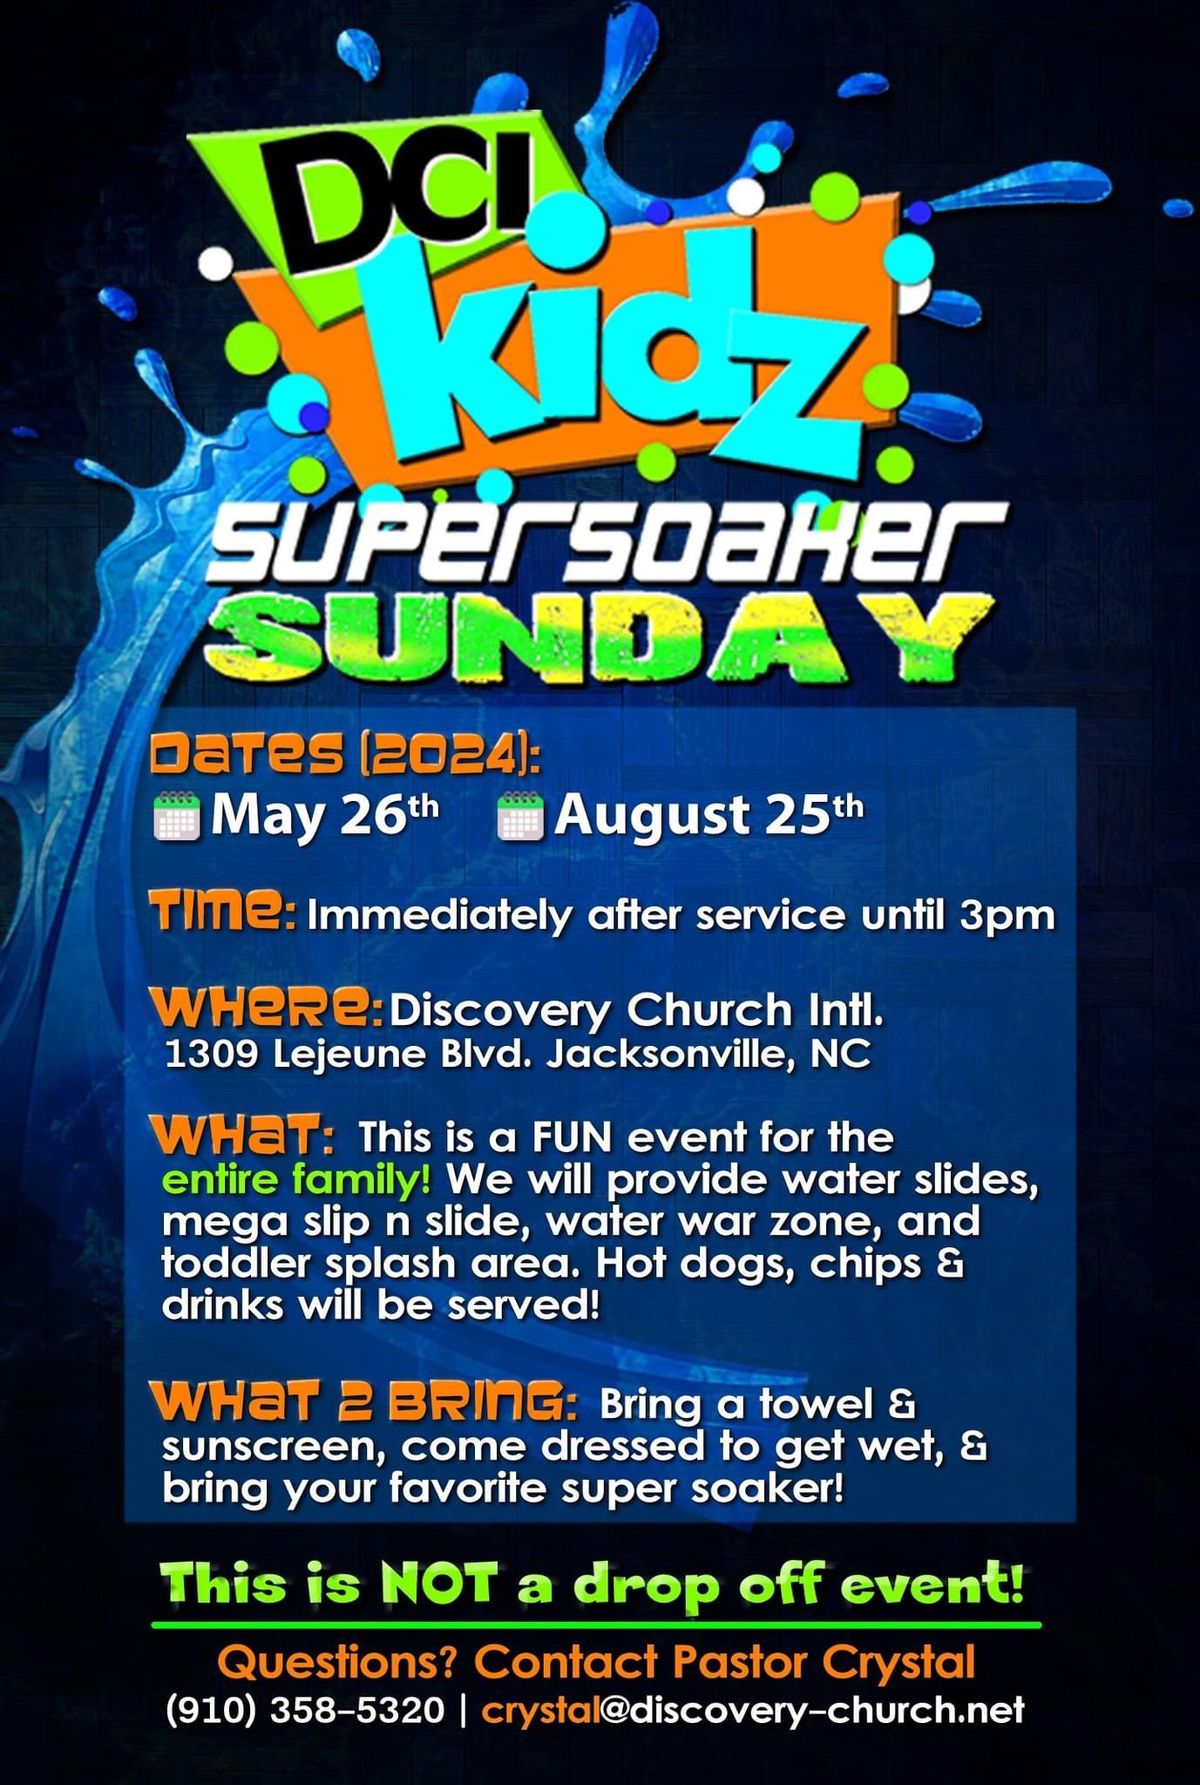 Super Soaker Sunday